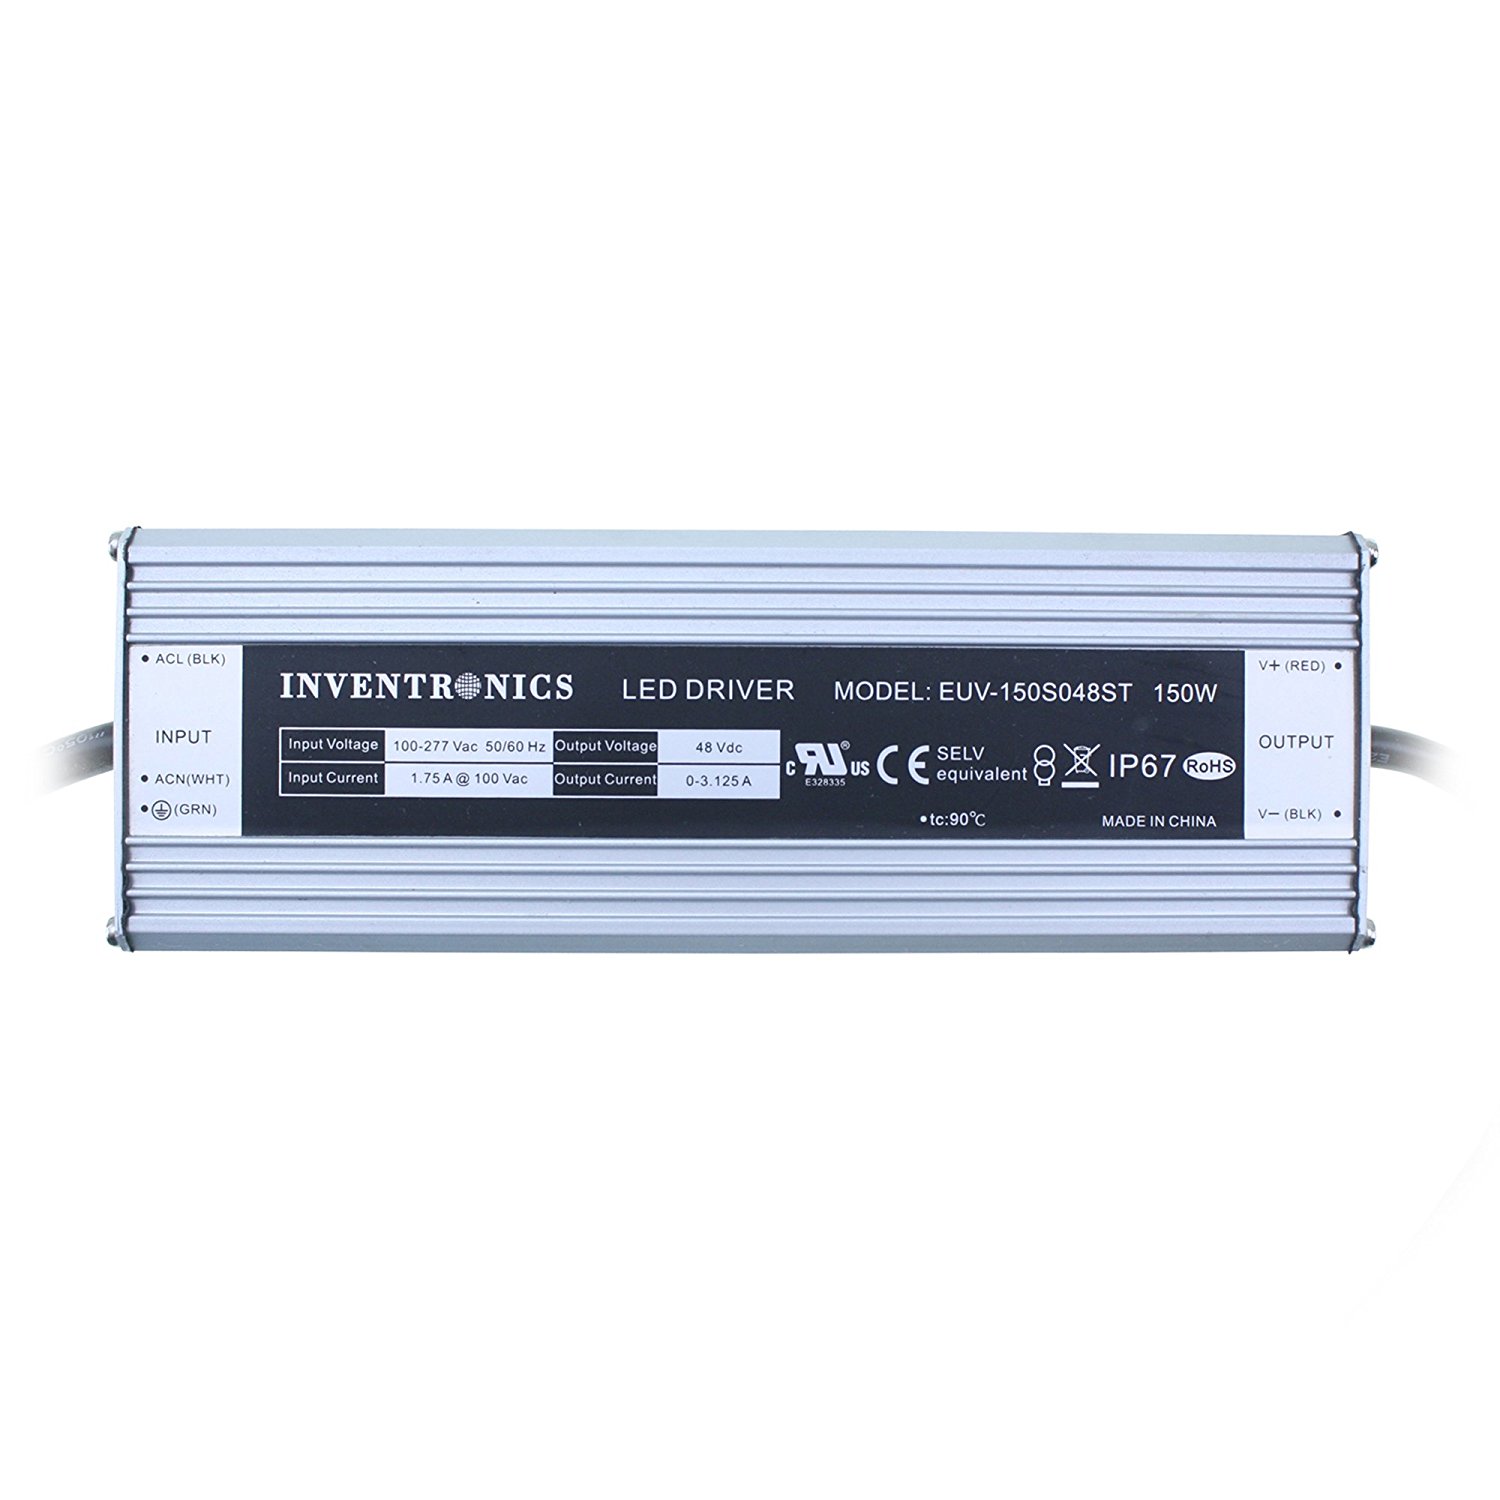 Chanzon LED Driver 300mA (Constant Current Output) 3V-20V (Input 100-240V  AC-DC) (1-6)